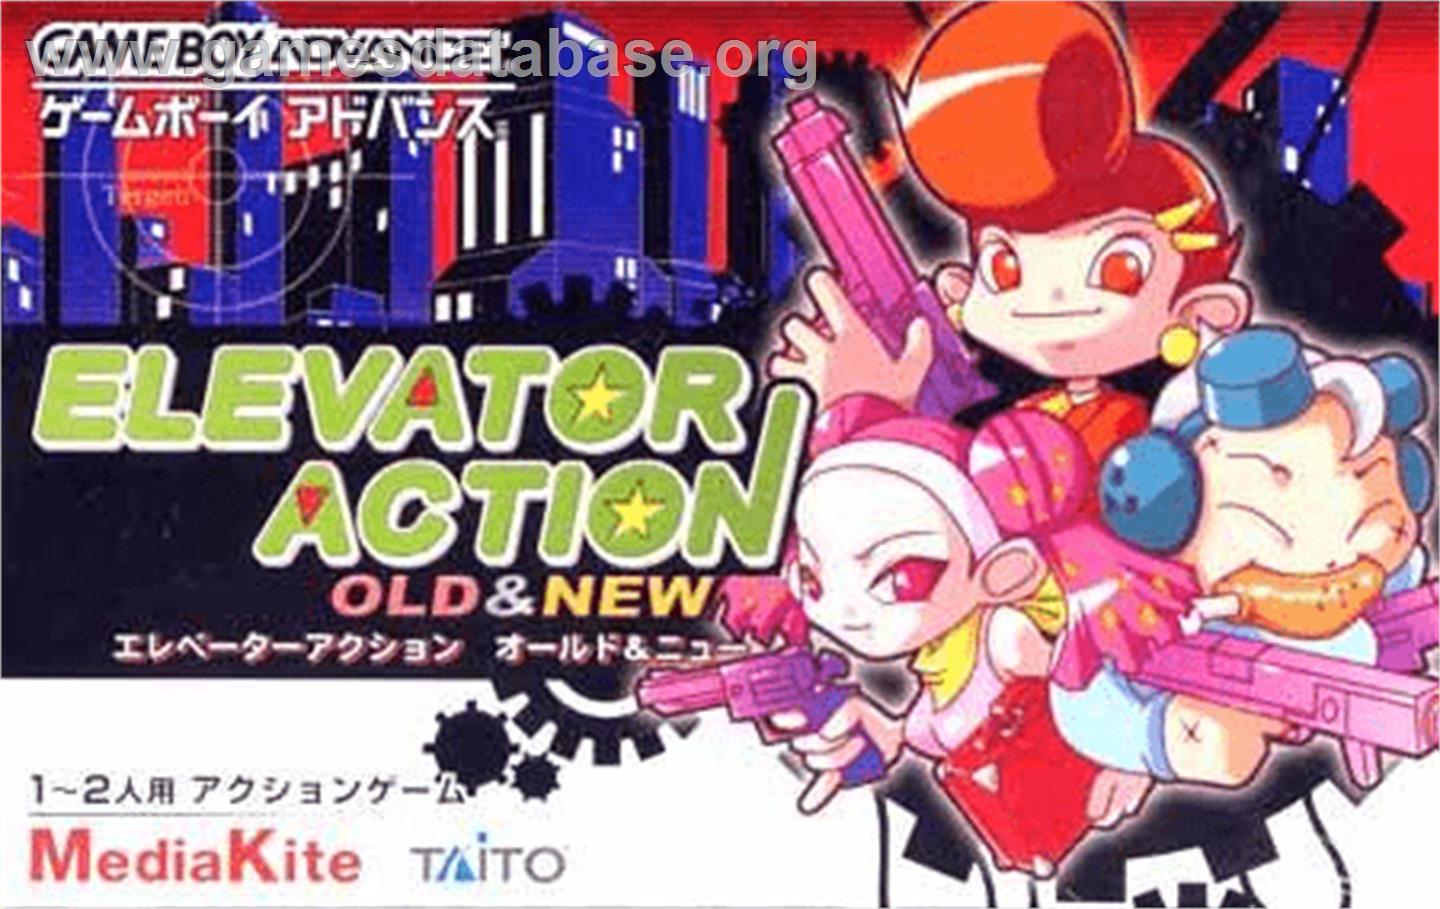 Elevator Action Old & New - Nintendo Game Boy Advance - Artwork - Box